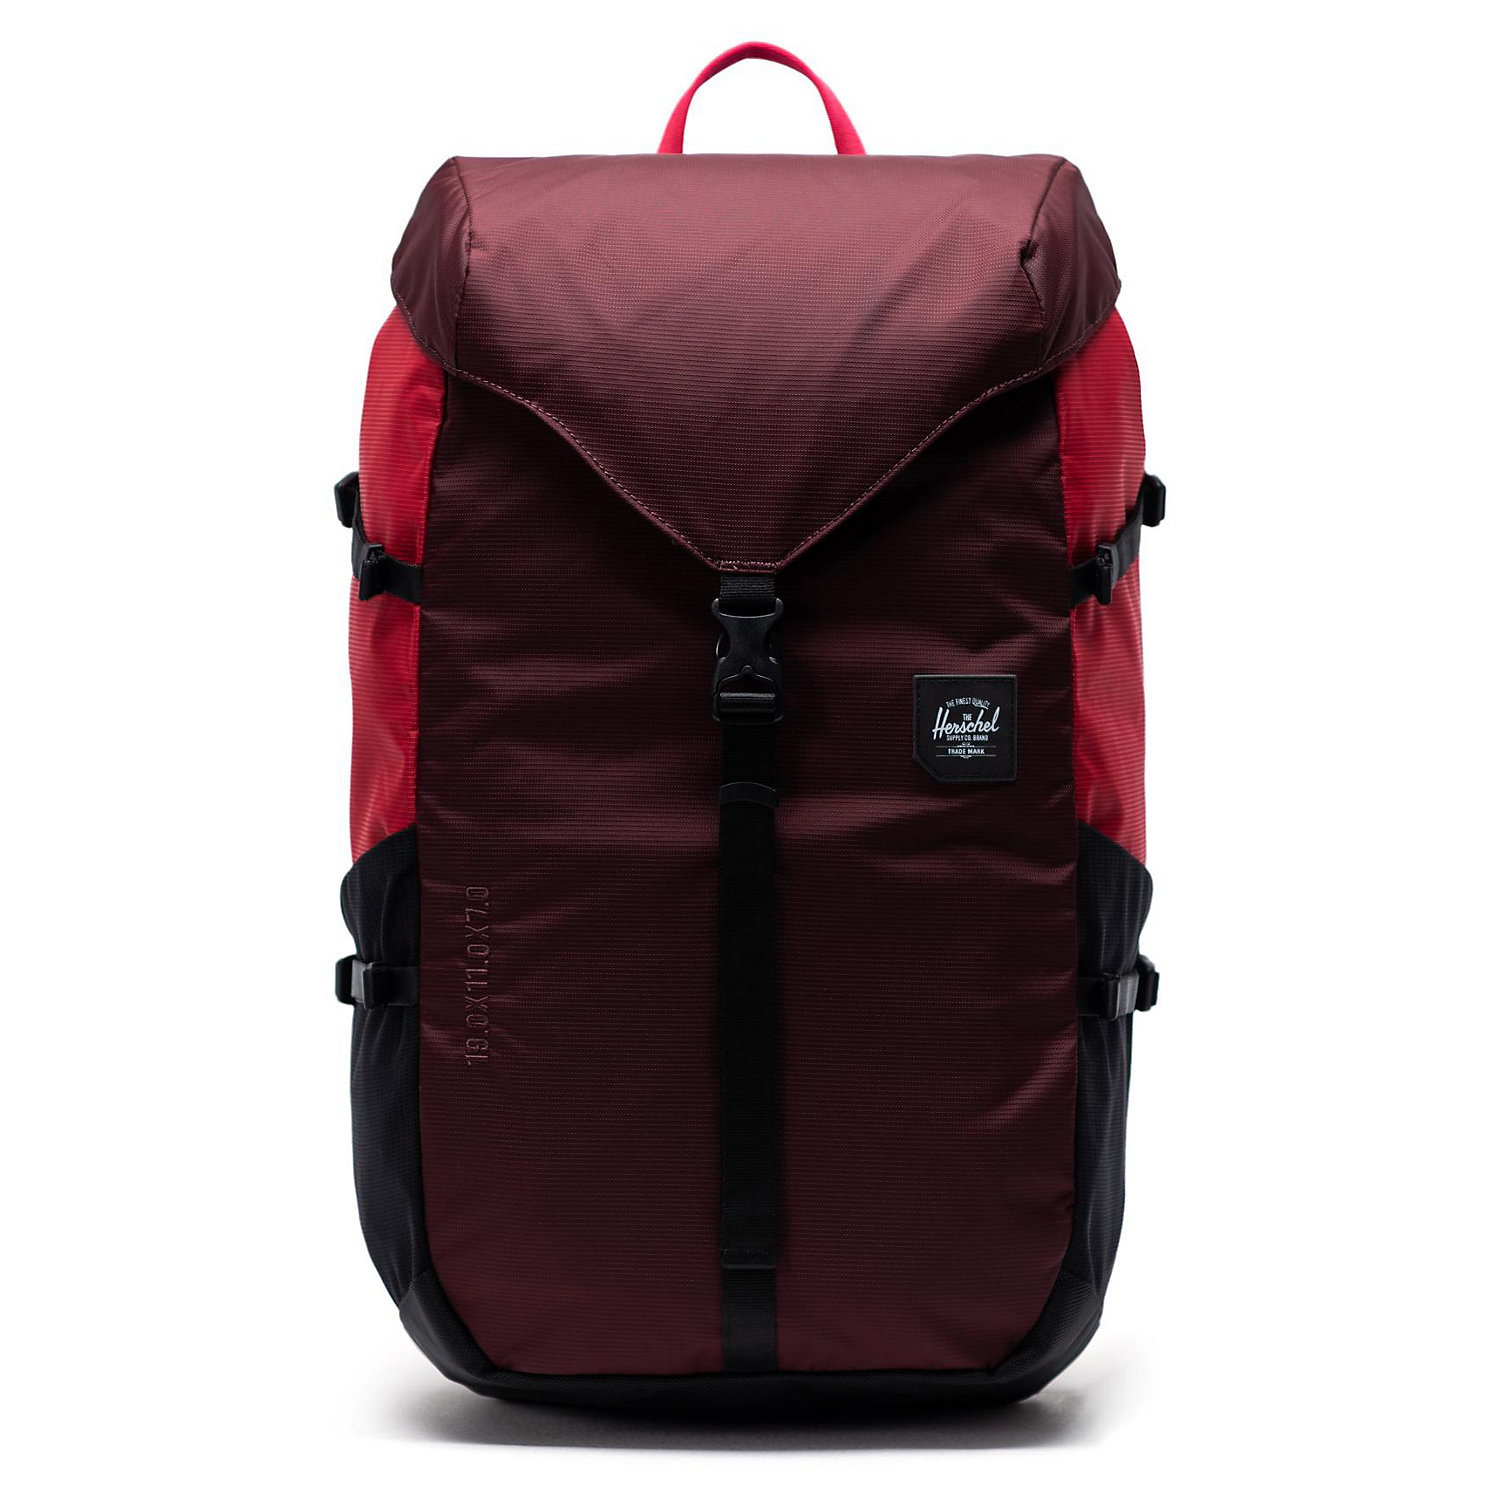 Herschel Supply Co Barlow Large Backpack